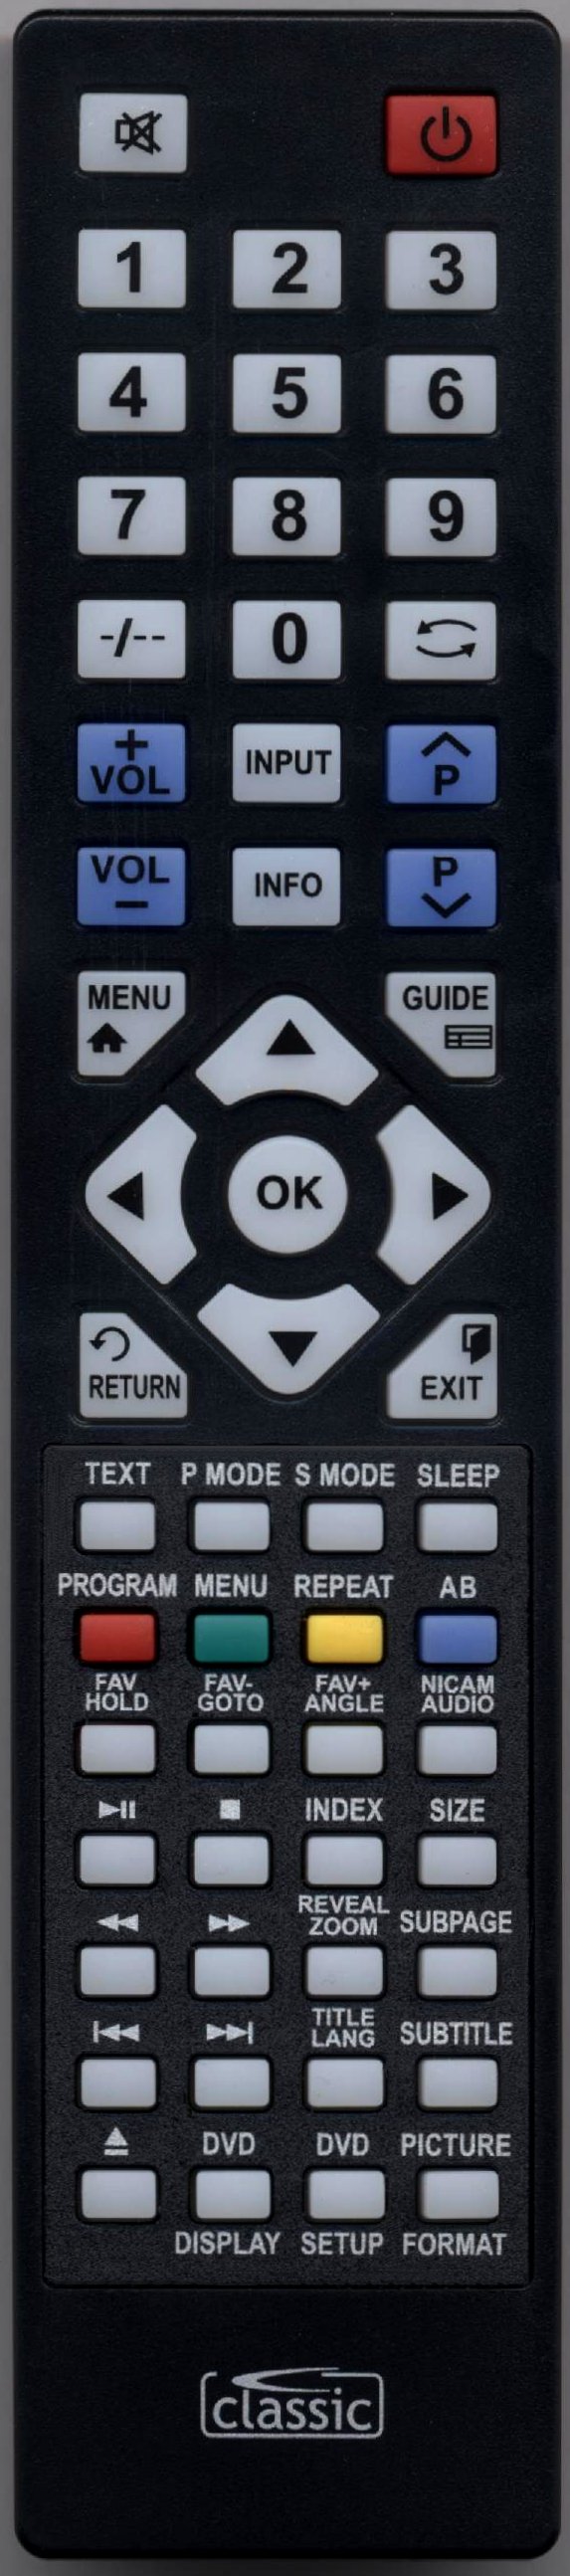 UMC X26/16-GB-TC-UK Remote Control